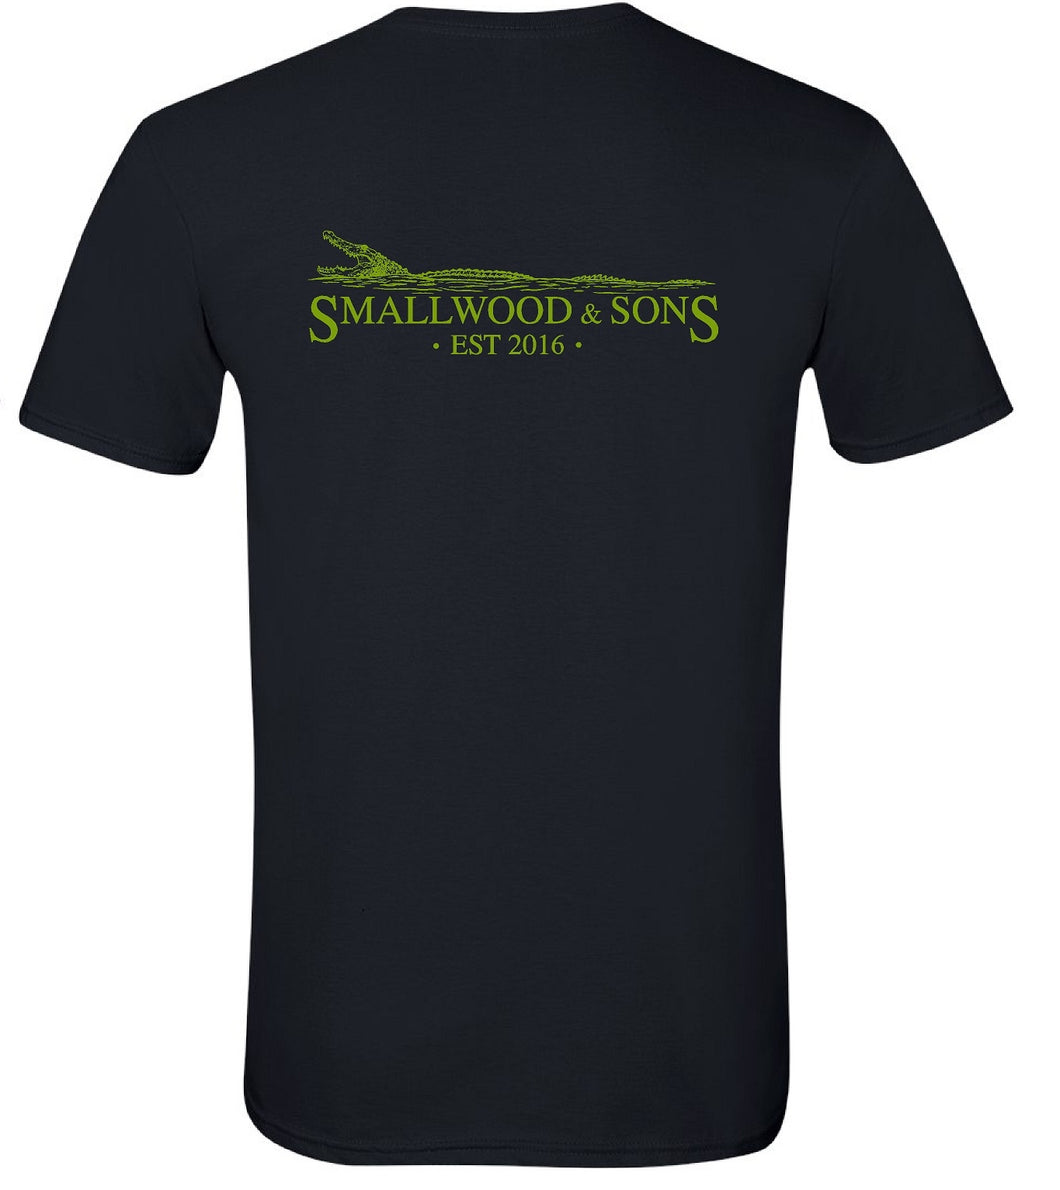 Smallwood and sons Alligator tee